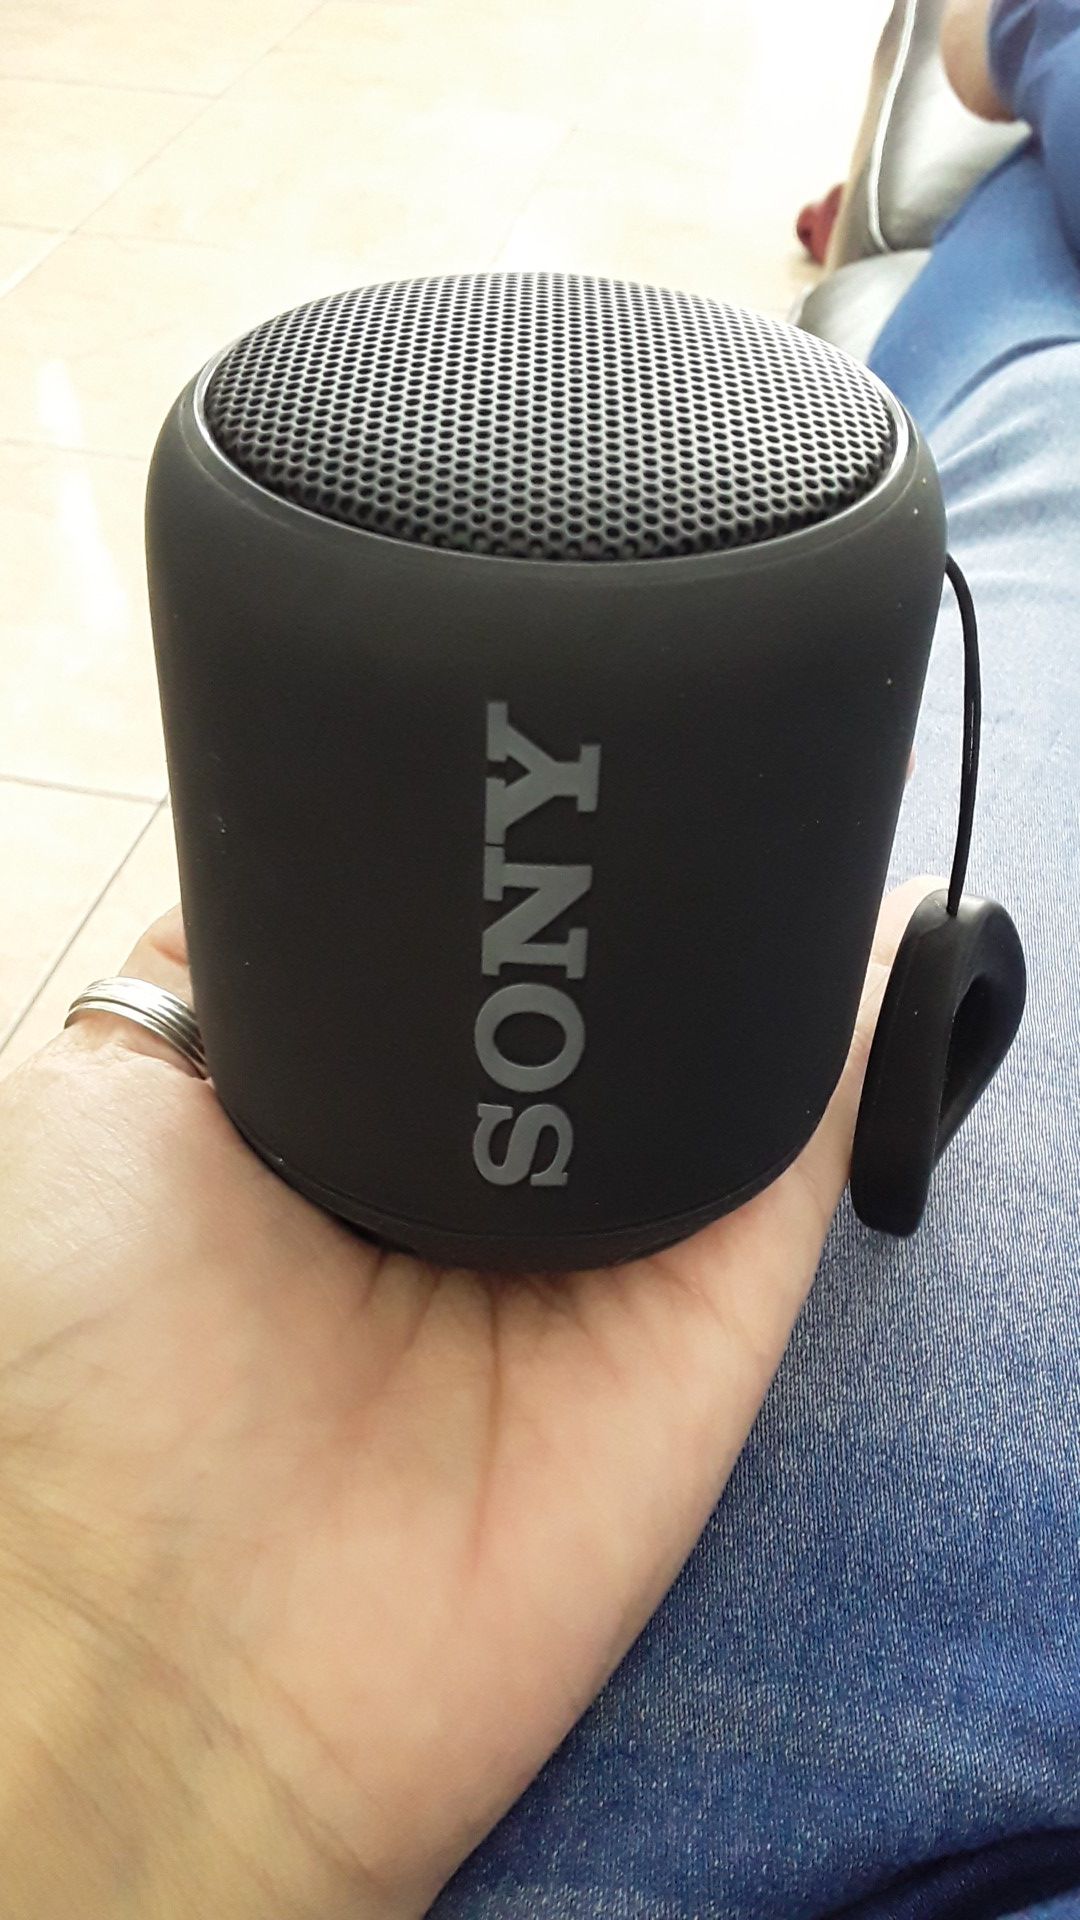 Sony portable splash proof bluetooth speaker